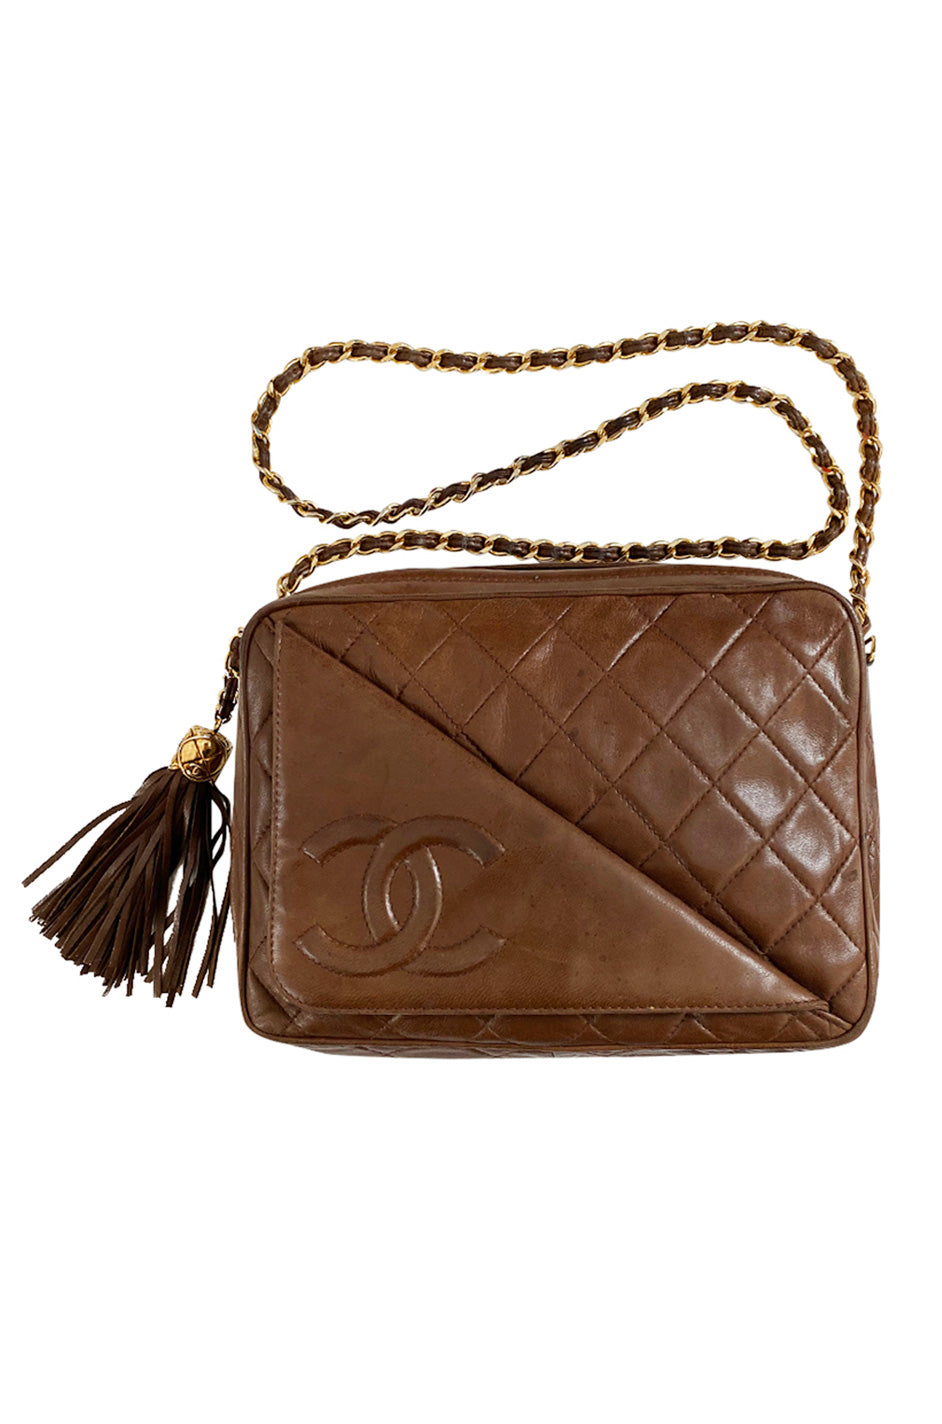 Vintage Chanel Mini Flap Bag Red Satin Gold Hardware – Madison